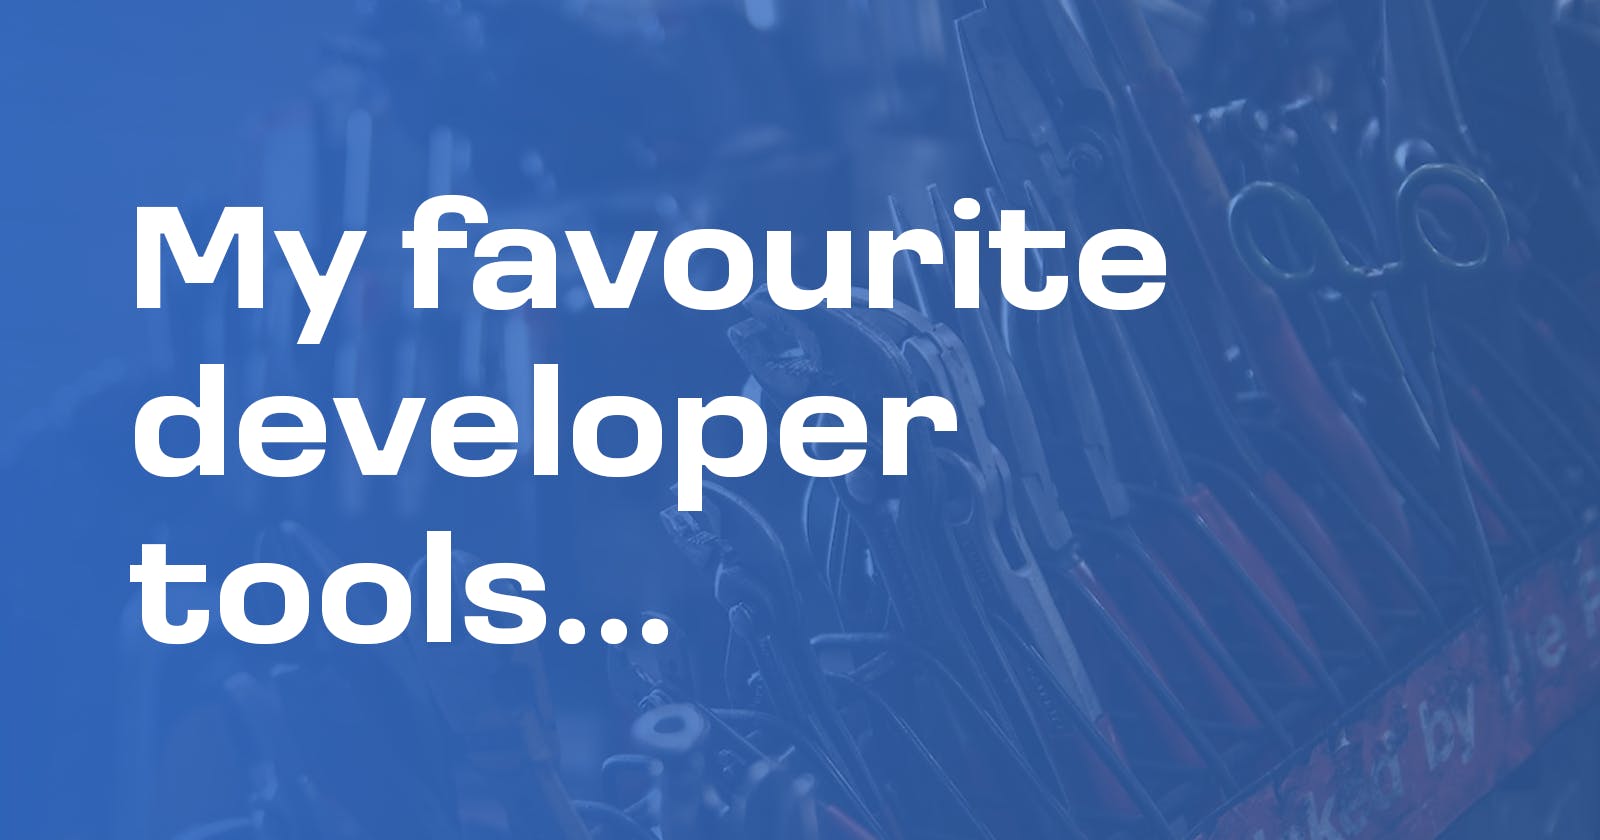 My favourite developer tools...